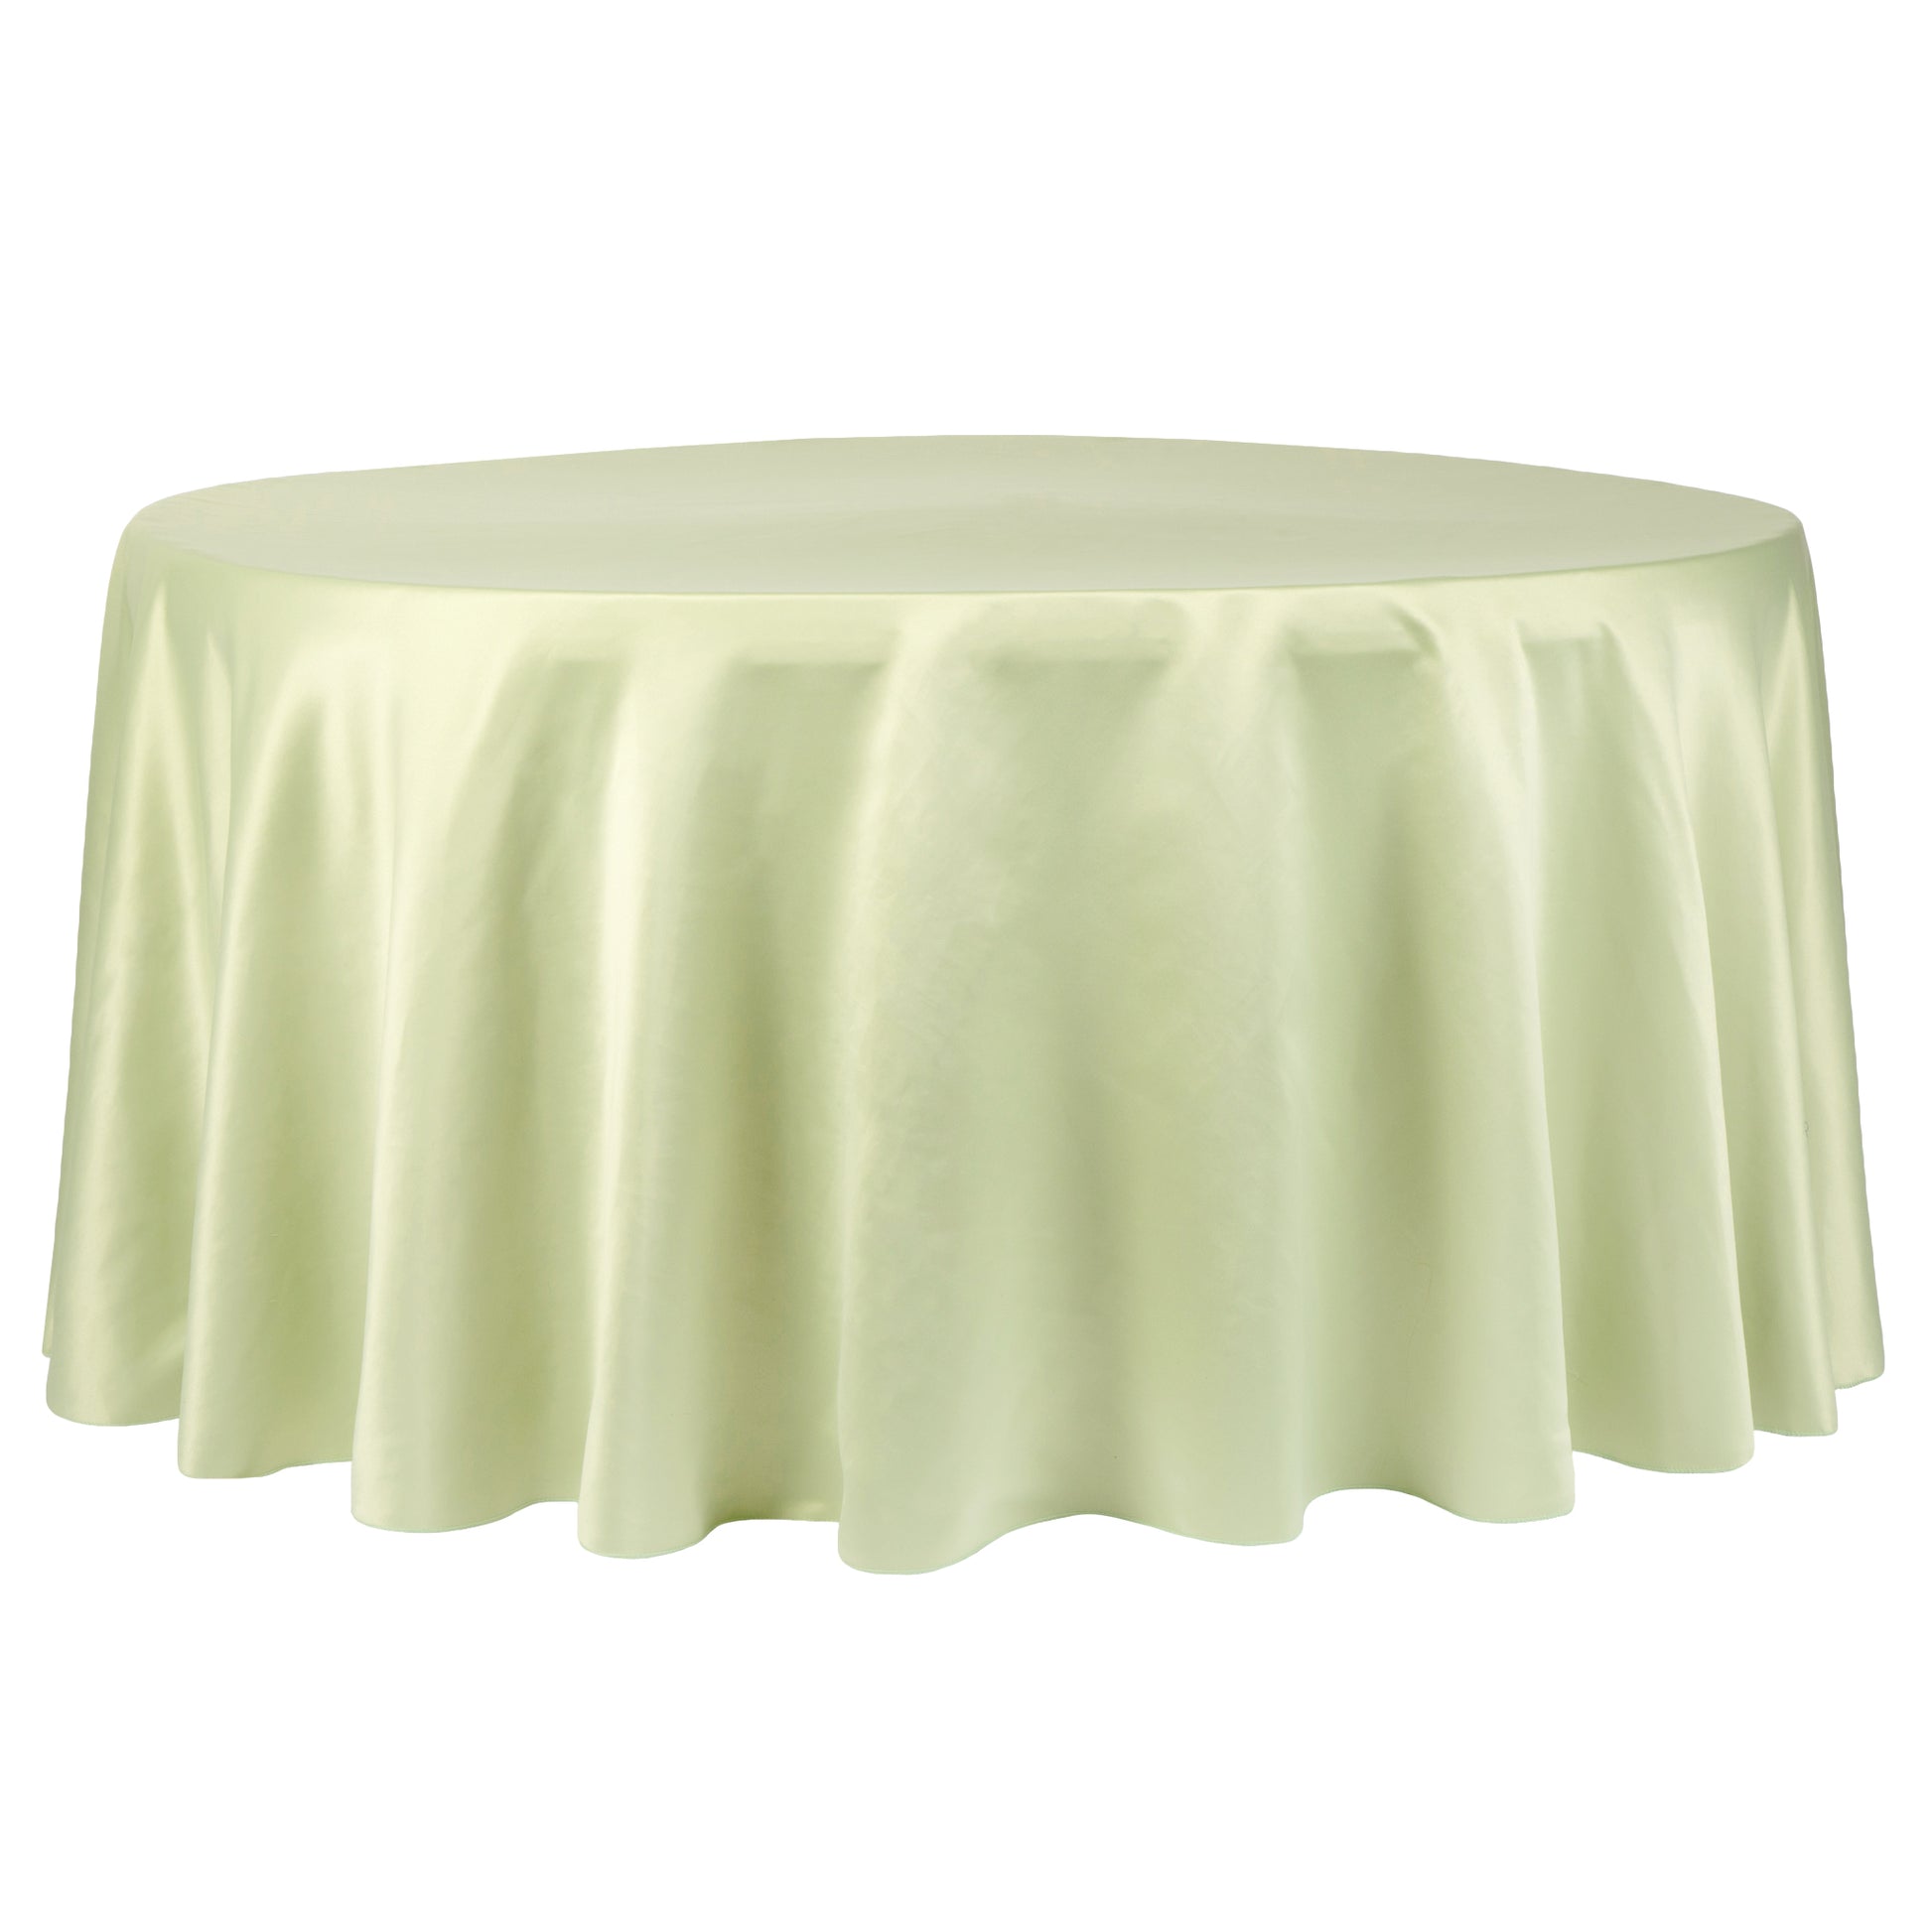 Lamour Satin 120" Round Tablecloth - Sage Green - CV Linens